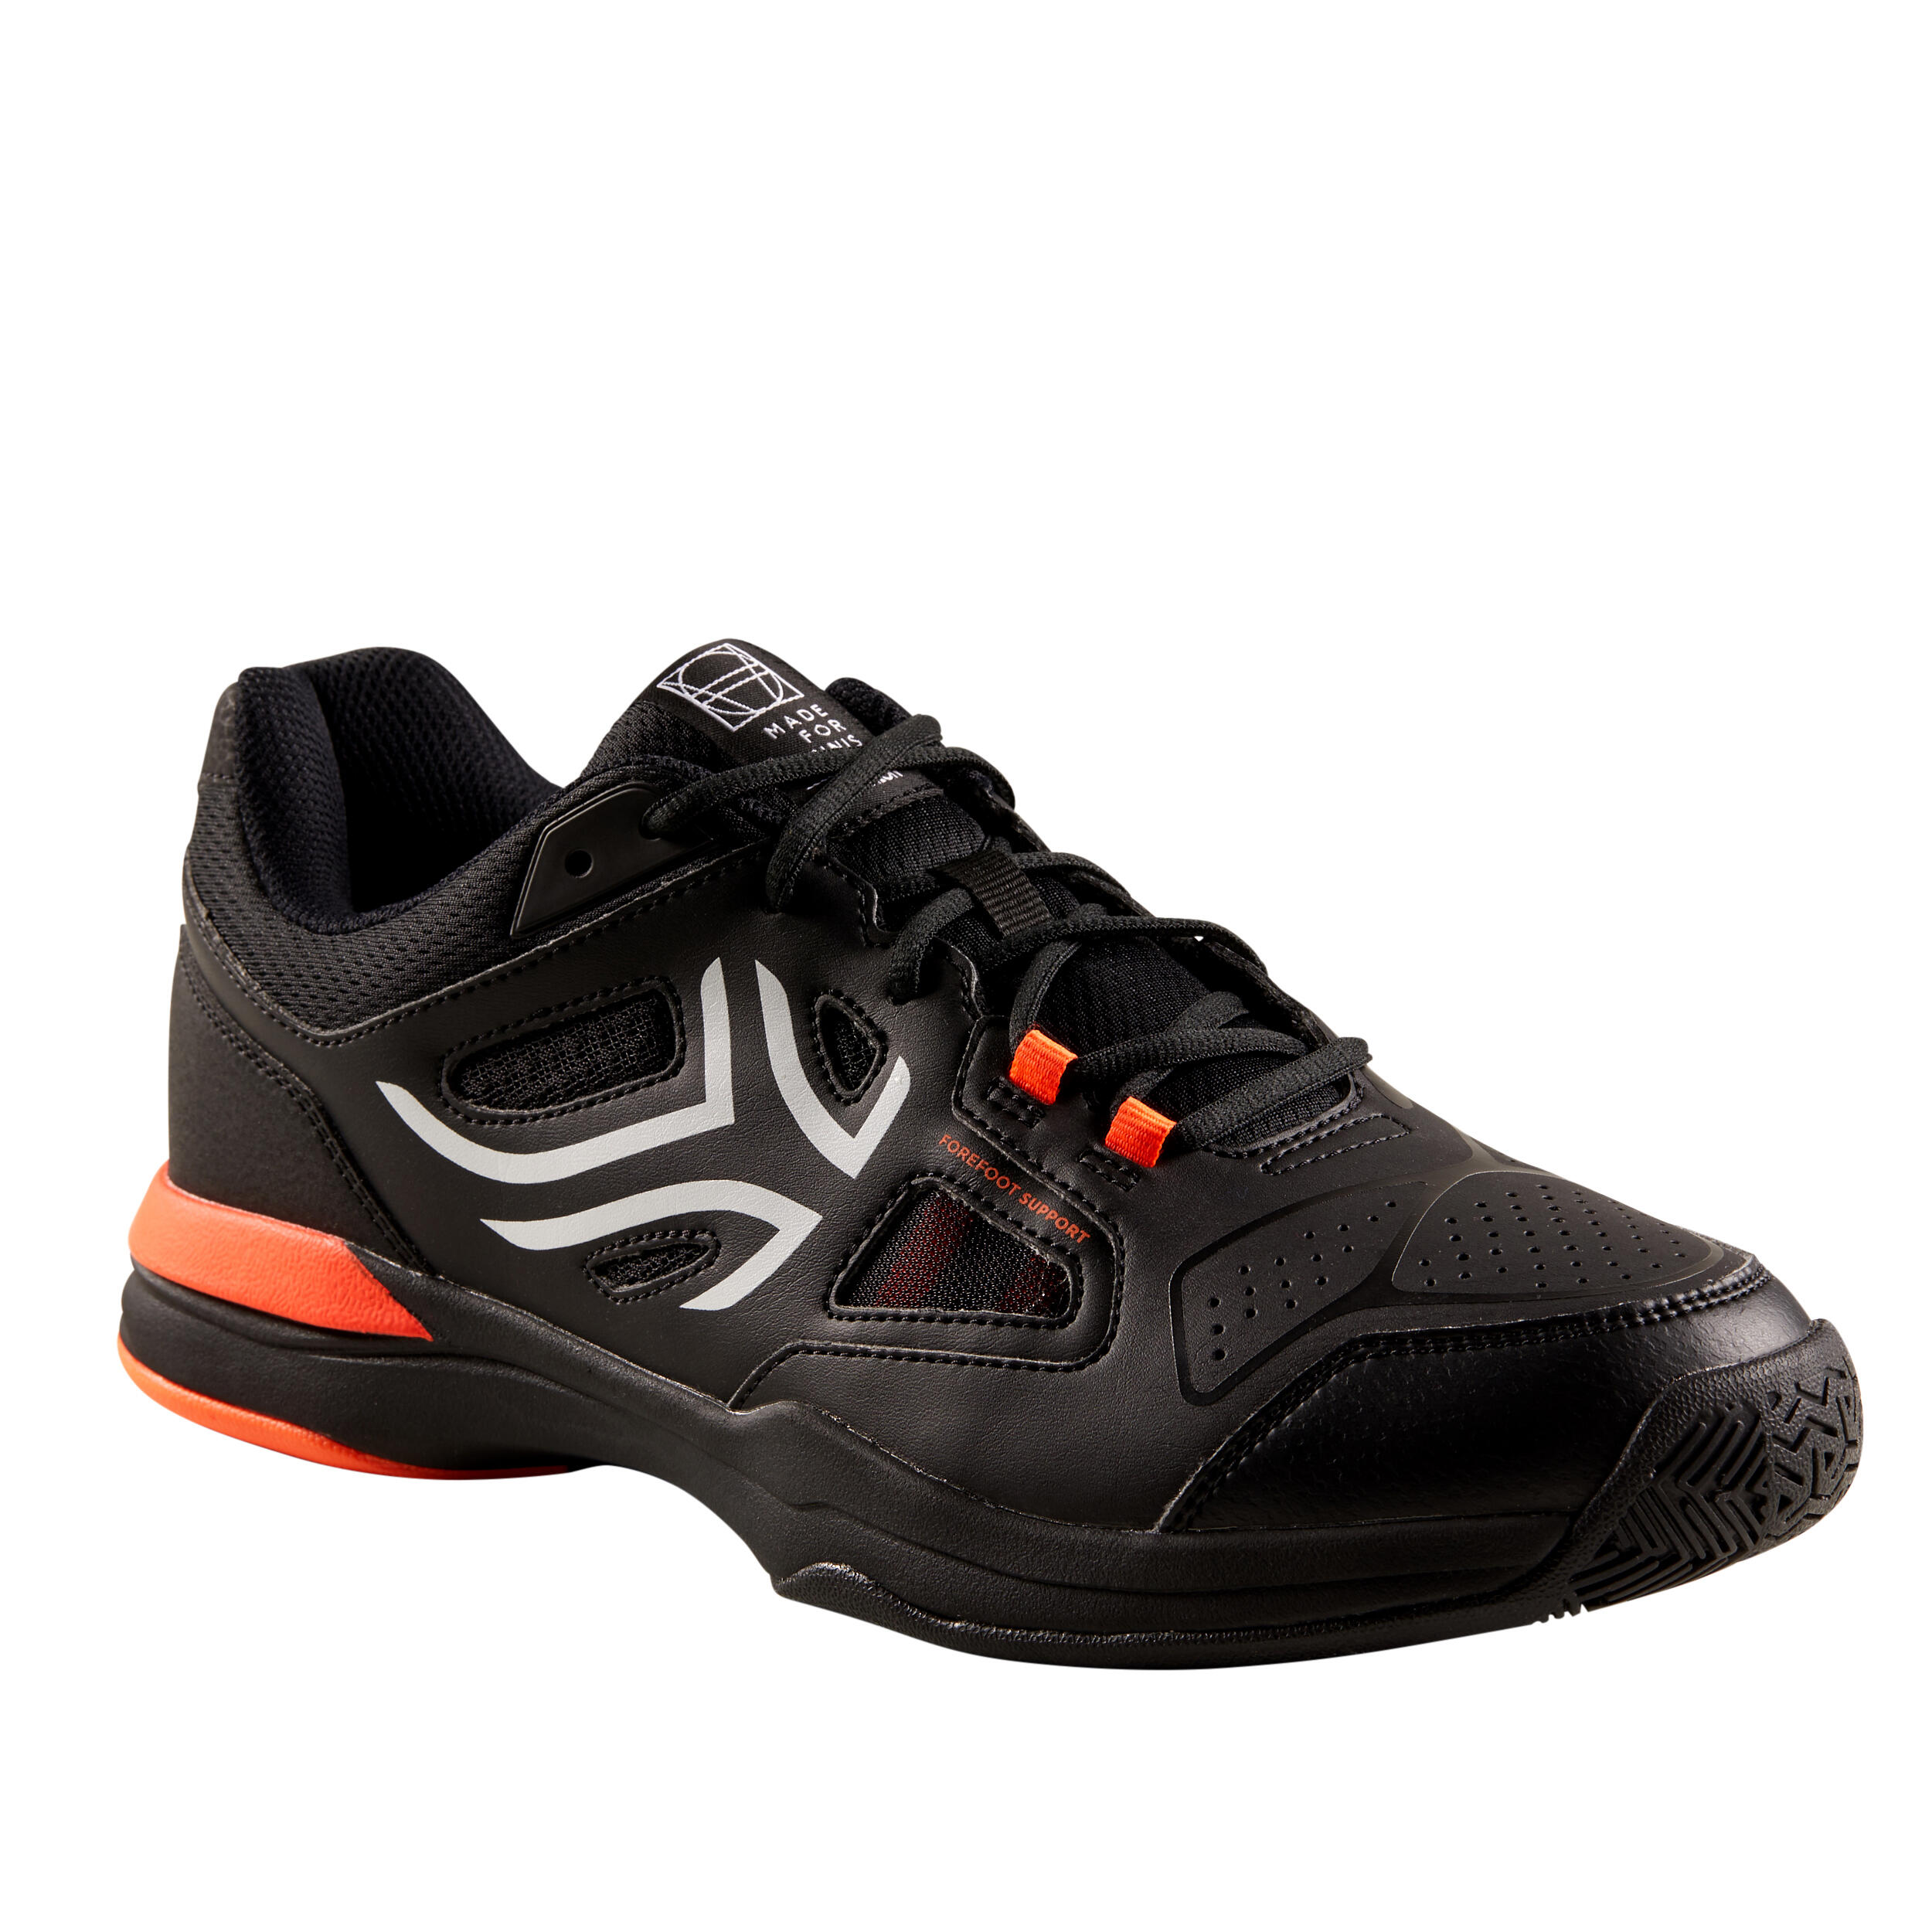 black and orange tennis shoes